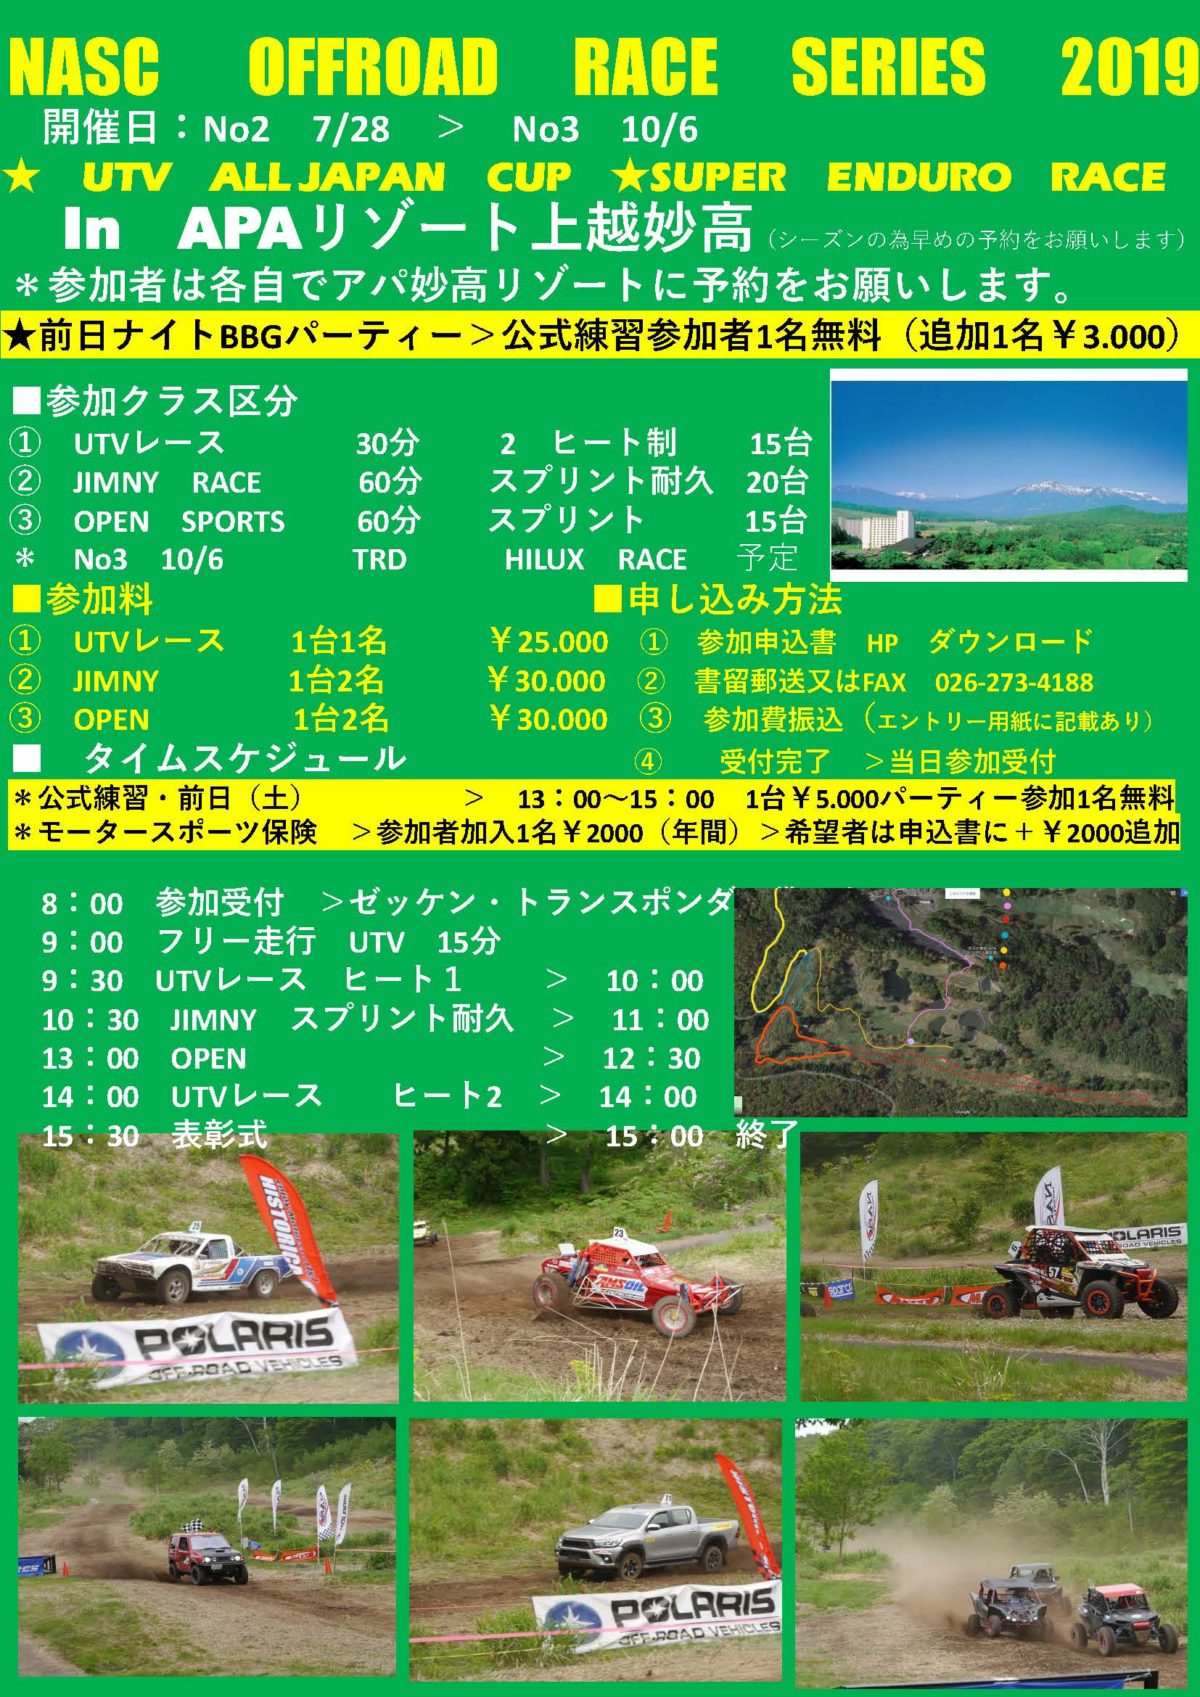 NASC OFFROAD RACE SERIES 2019 ★ UTV ALL JAPAN CUP ★ SUPER ENDURO RACE